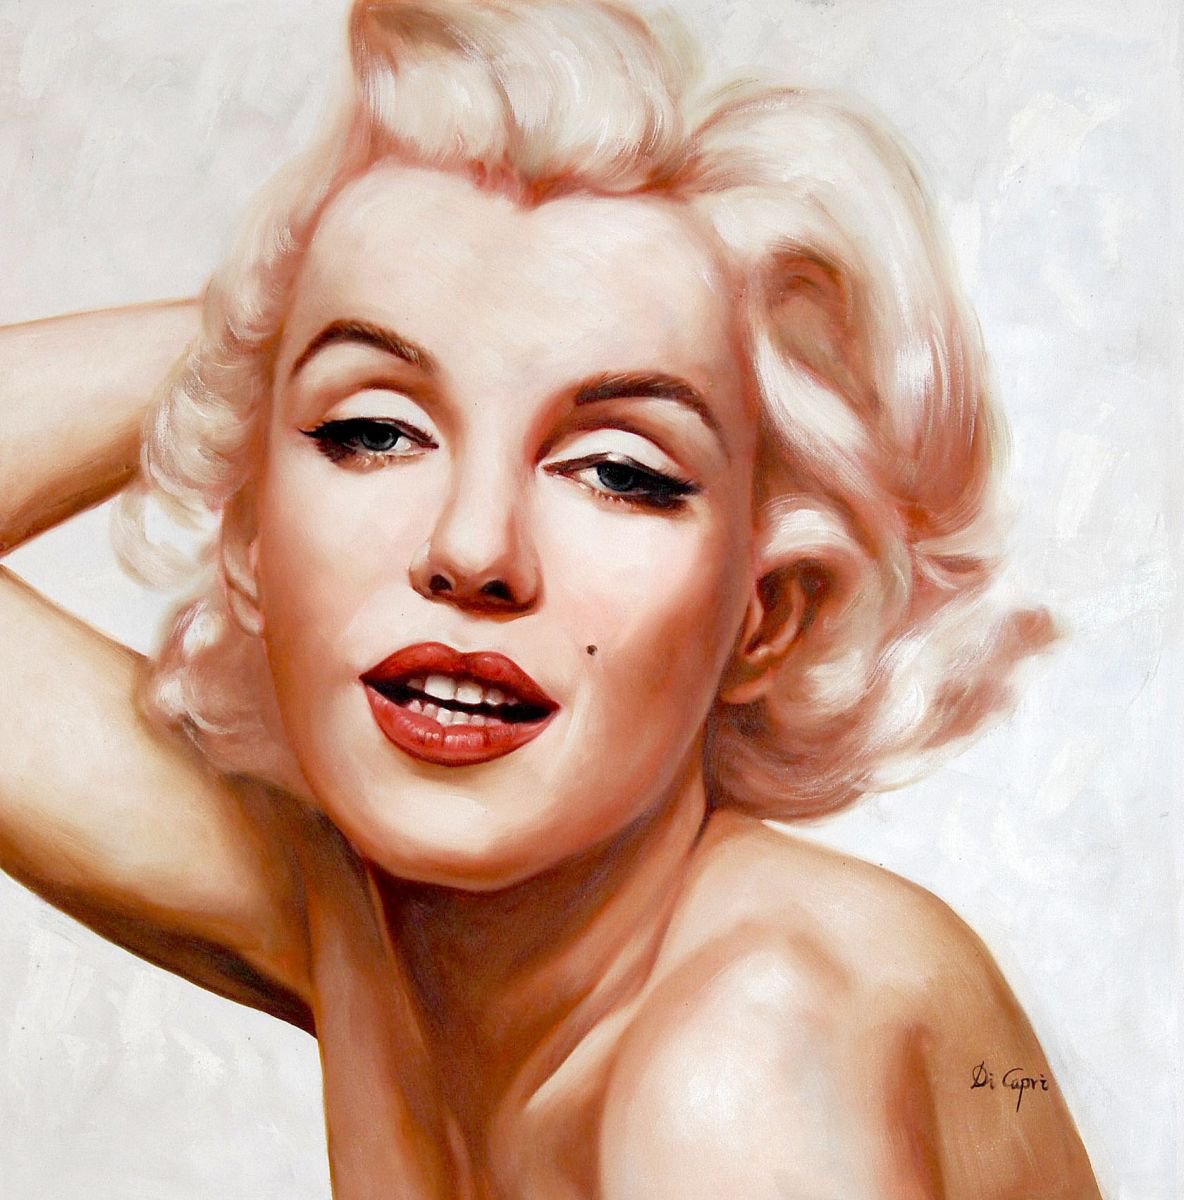 Marilyn Monroe Portrait "The Last Sitting" By: Bert Stern by Di Capri